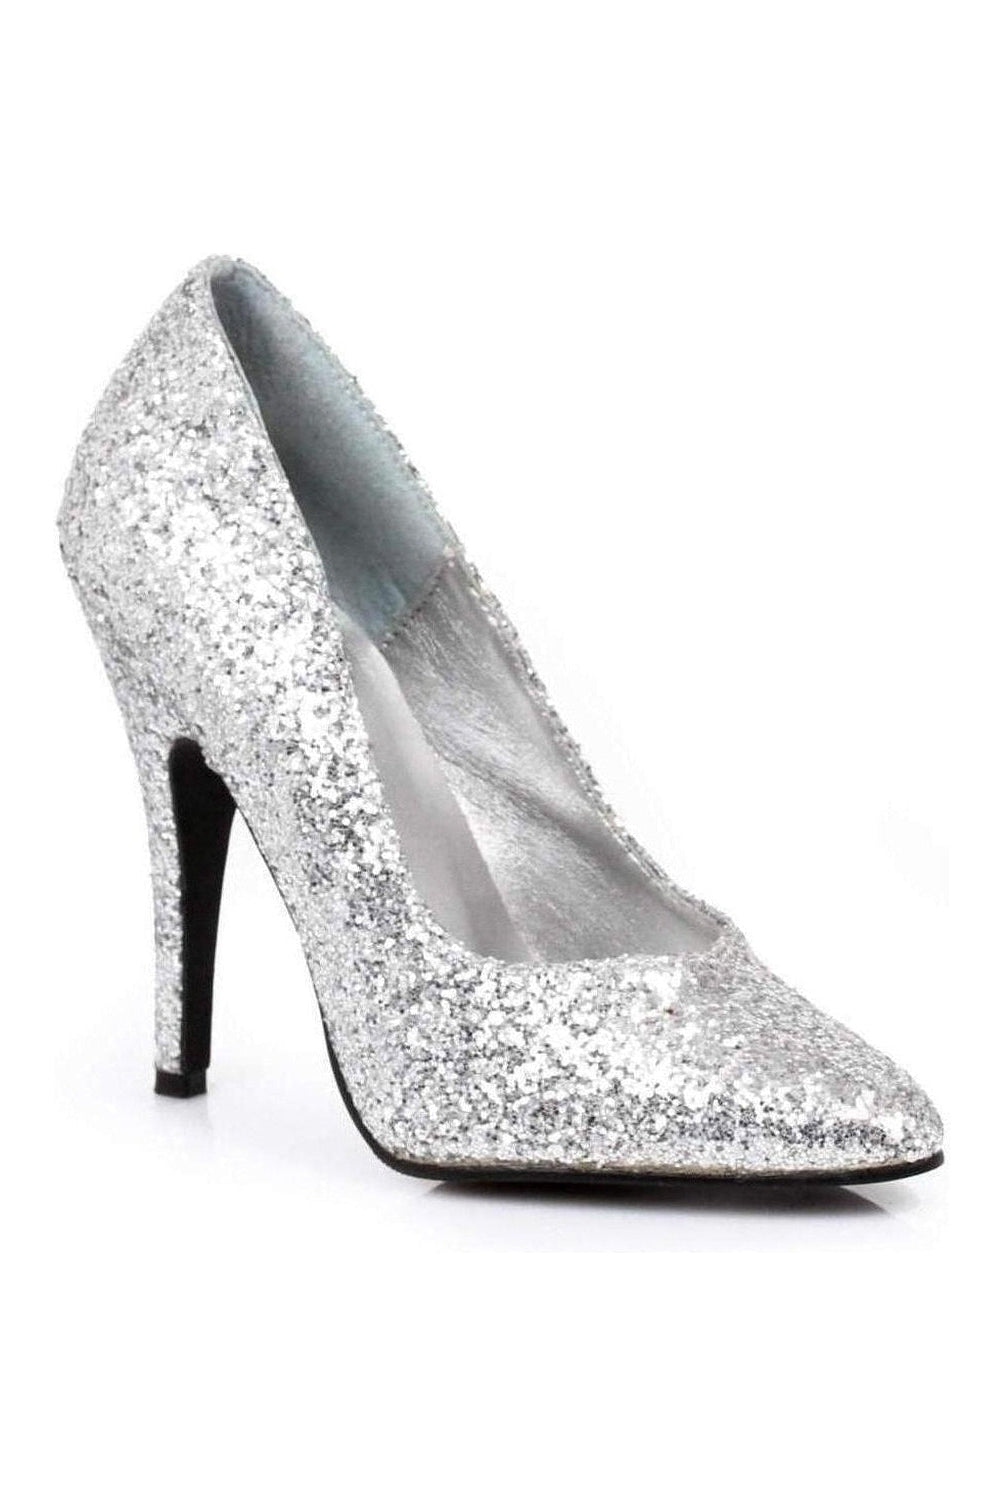 511-GLITTER Pump | Silver Glitter Glitter-Ellie Shoes-Silver-Pumps-SEXYSHOES.COM